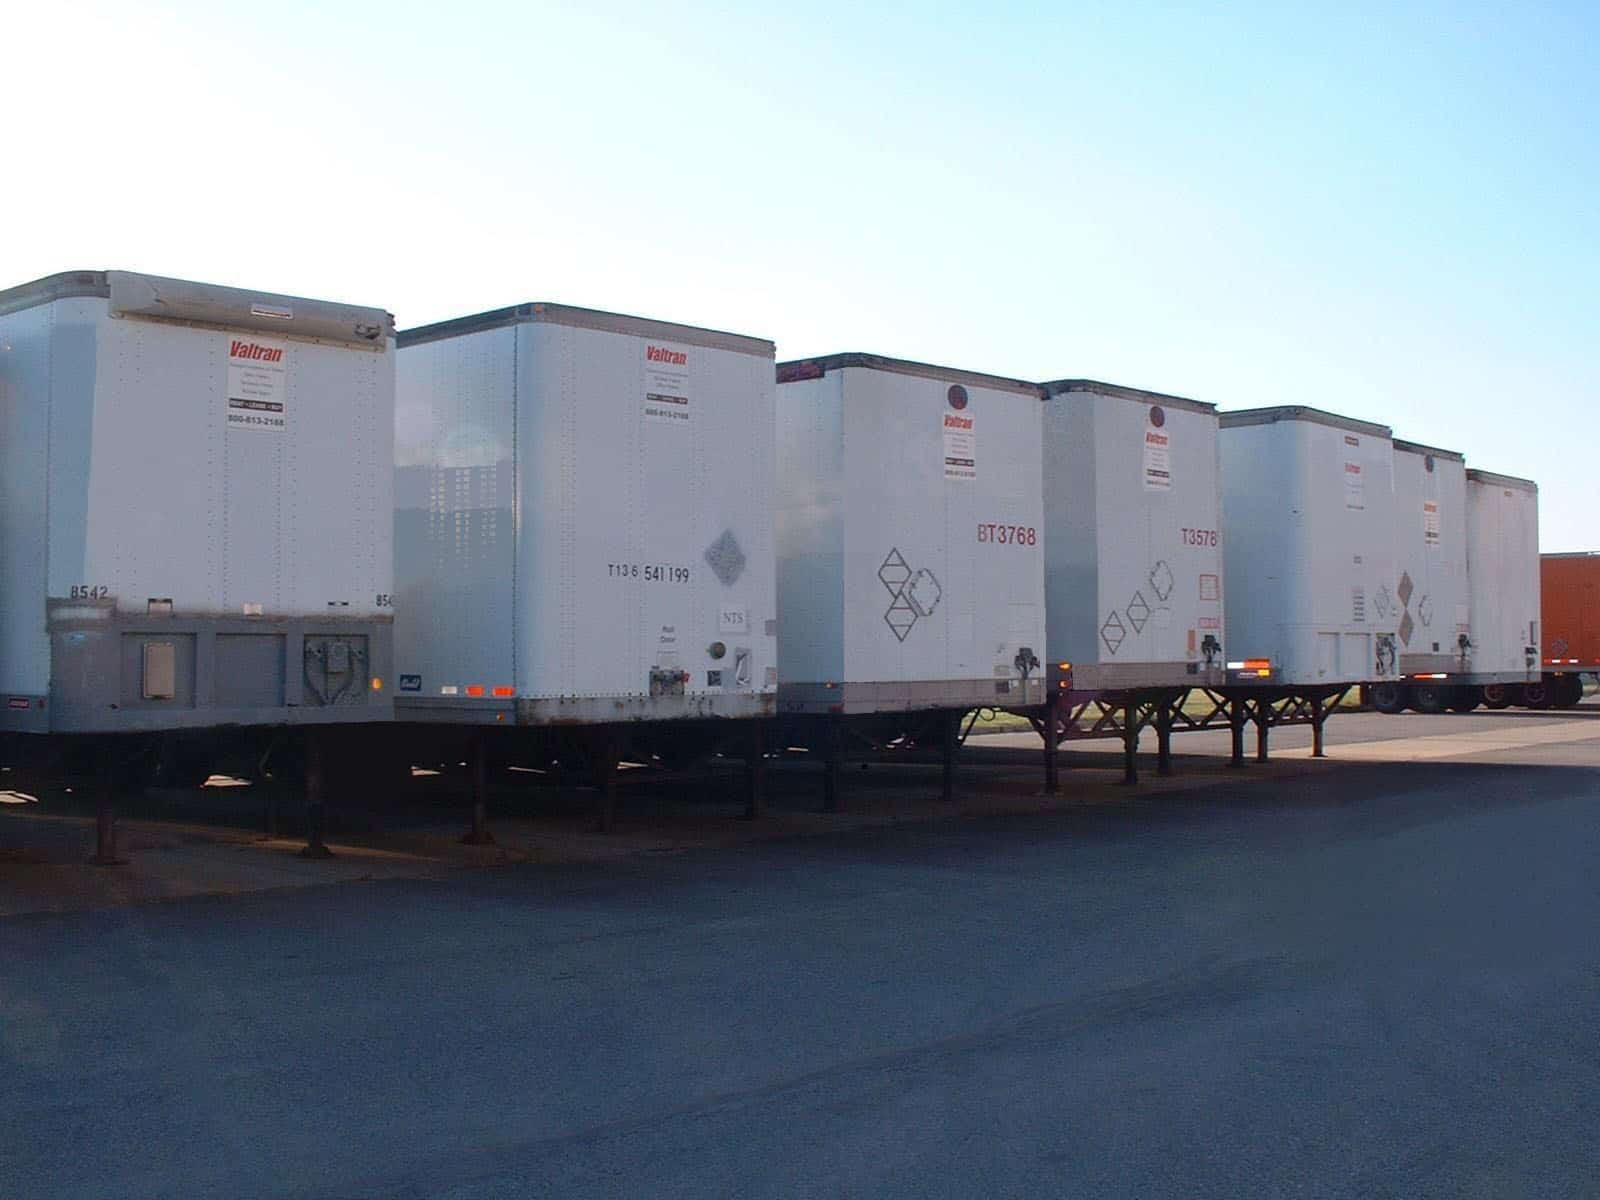 Five trailers side by side in a parking lot.